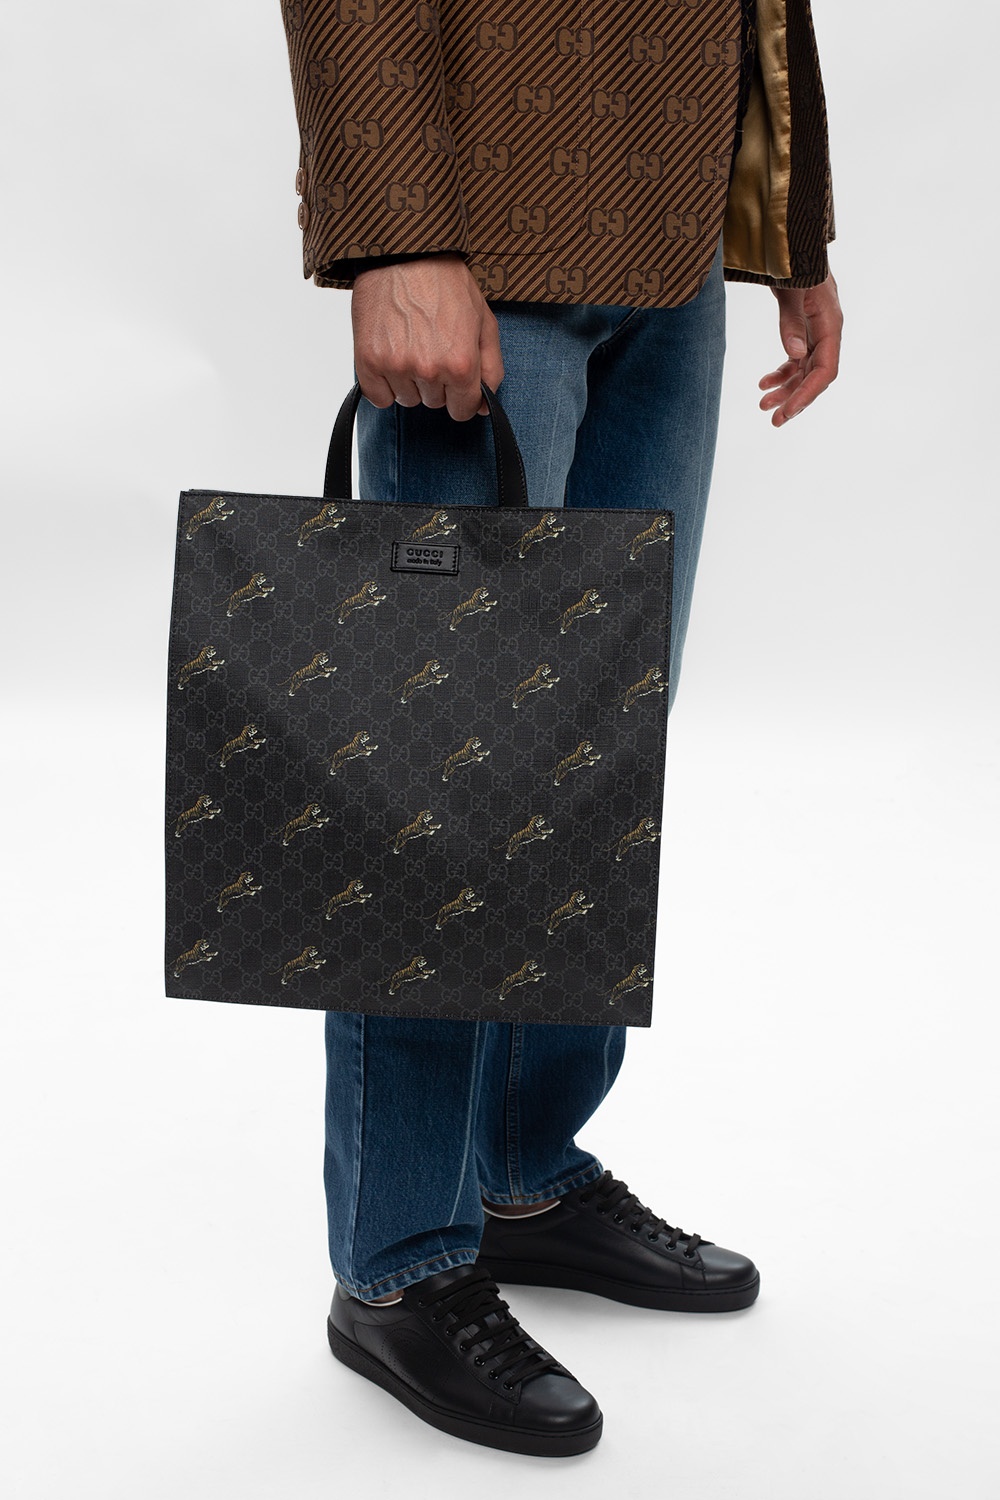 Gucci Leopard Print Tote Bags  Mercari